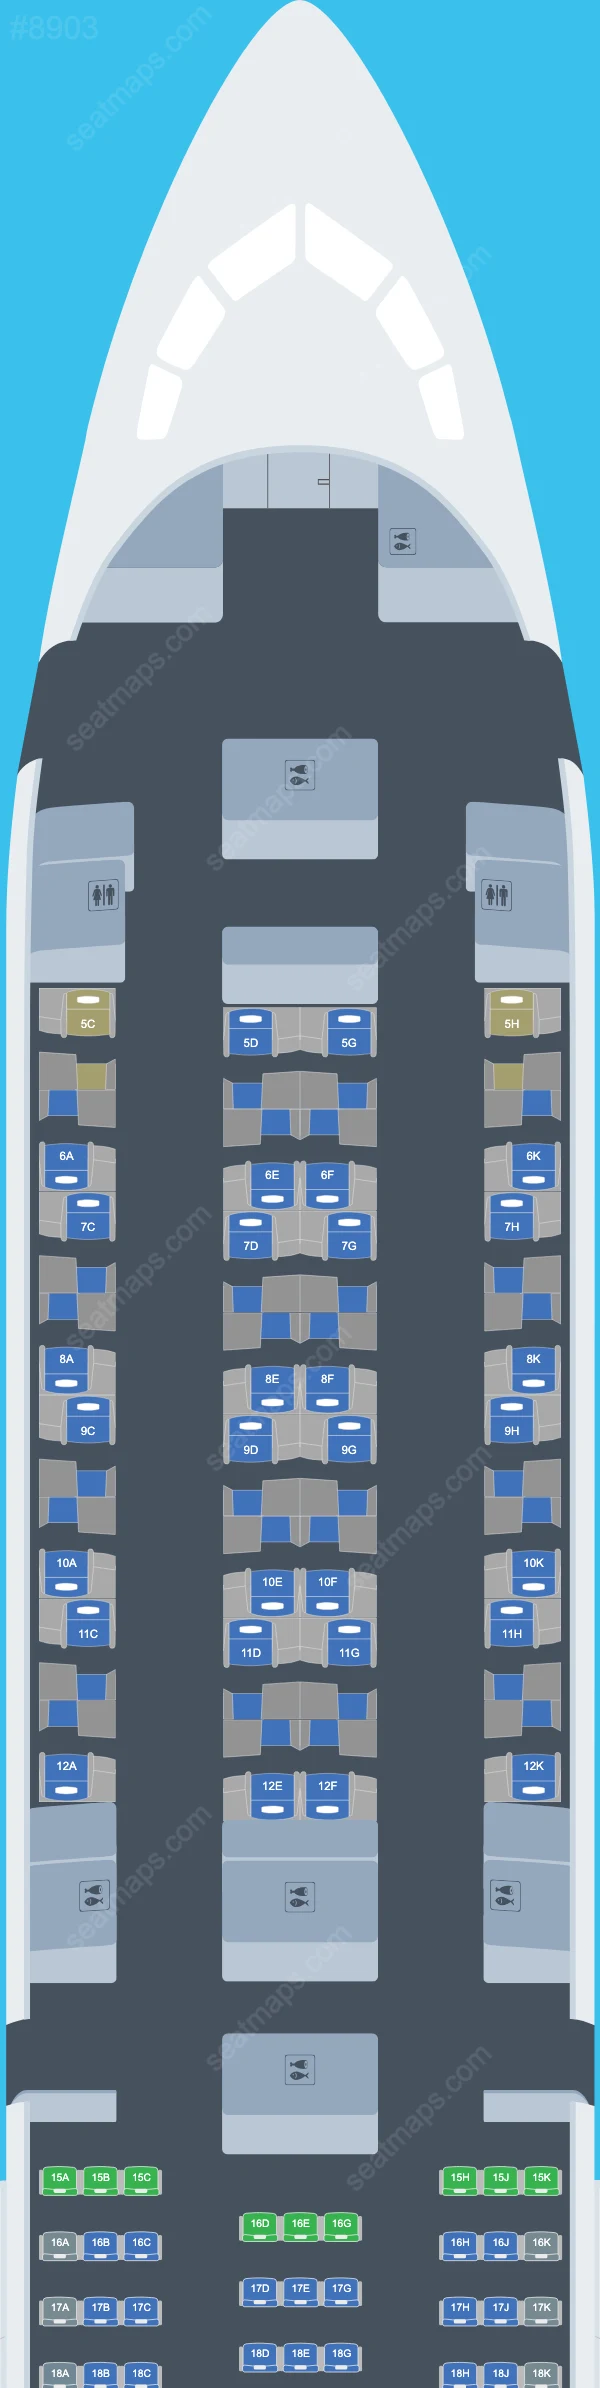 Etihad Airways Boeing 787 Seat Maps 787-10